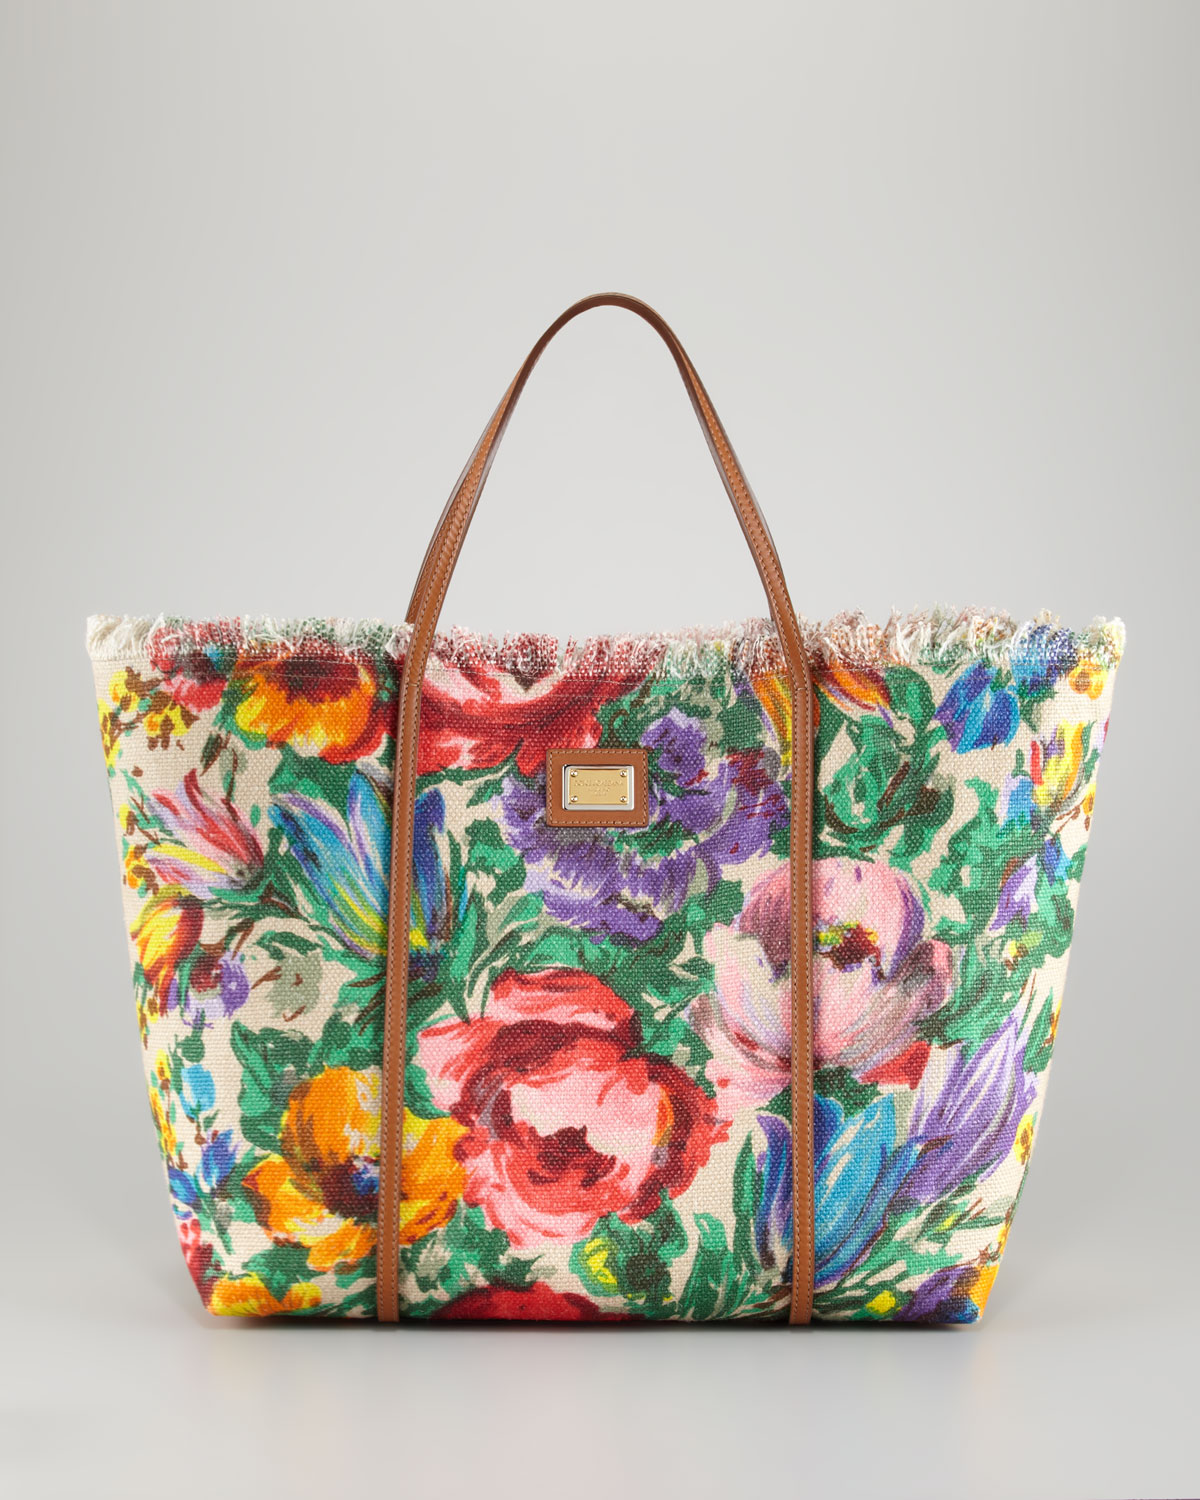 Lyst - Dolce & Gabbana Miss Escape Floral Canvas Tote Bag